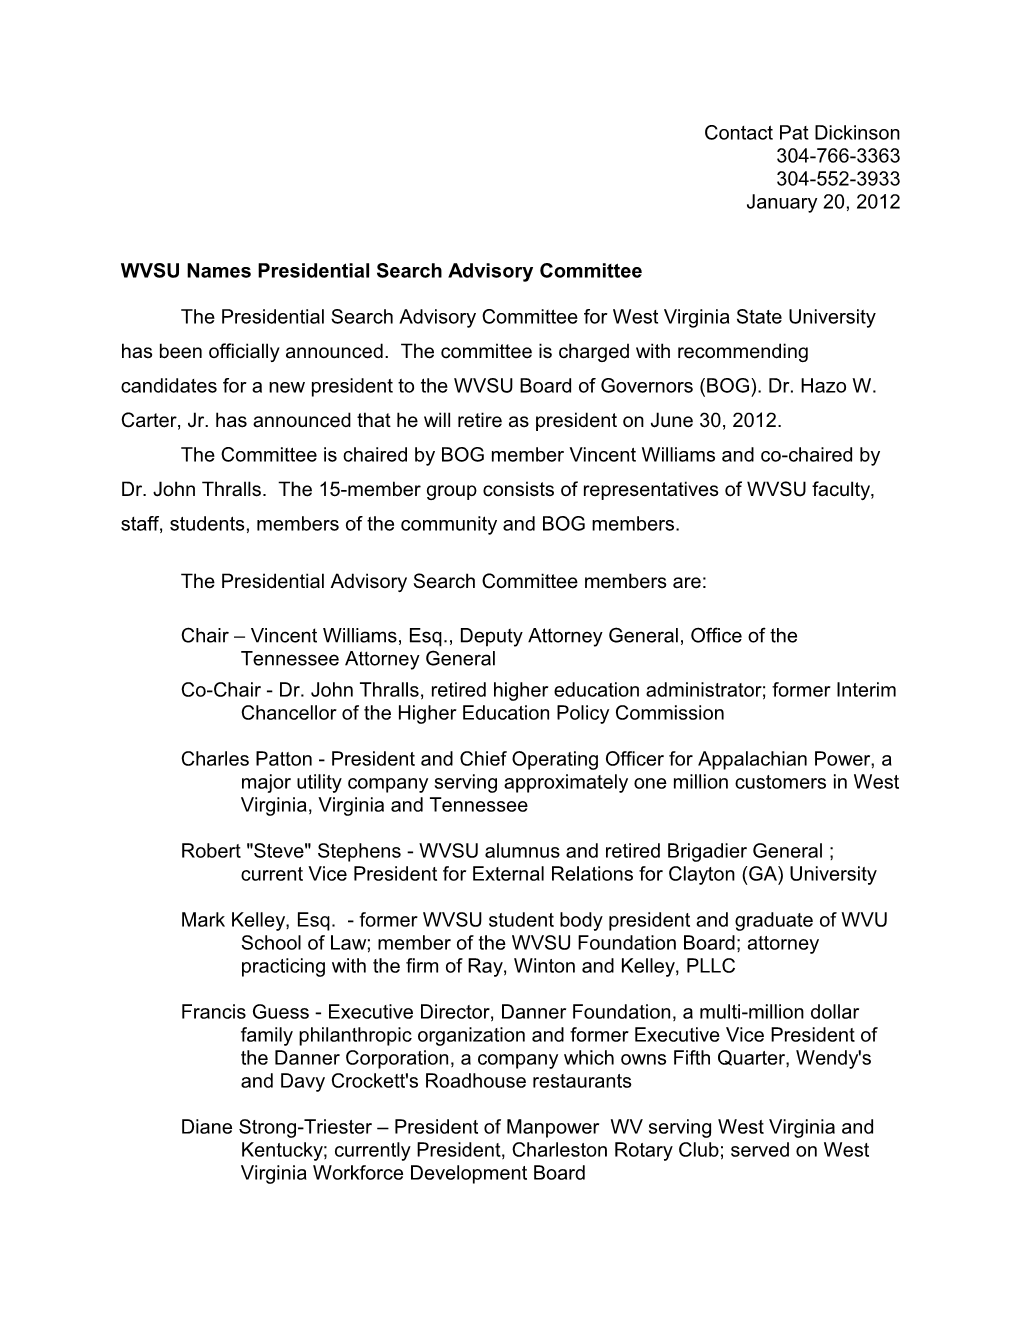 WVSU Names Presidential Search Advisory Committee